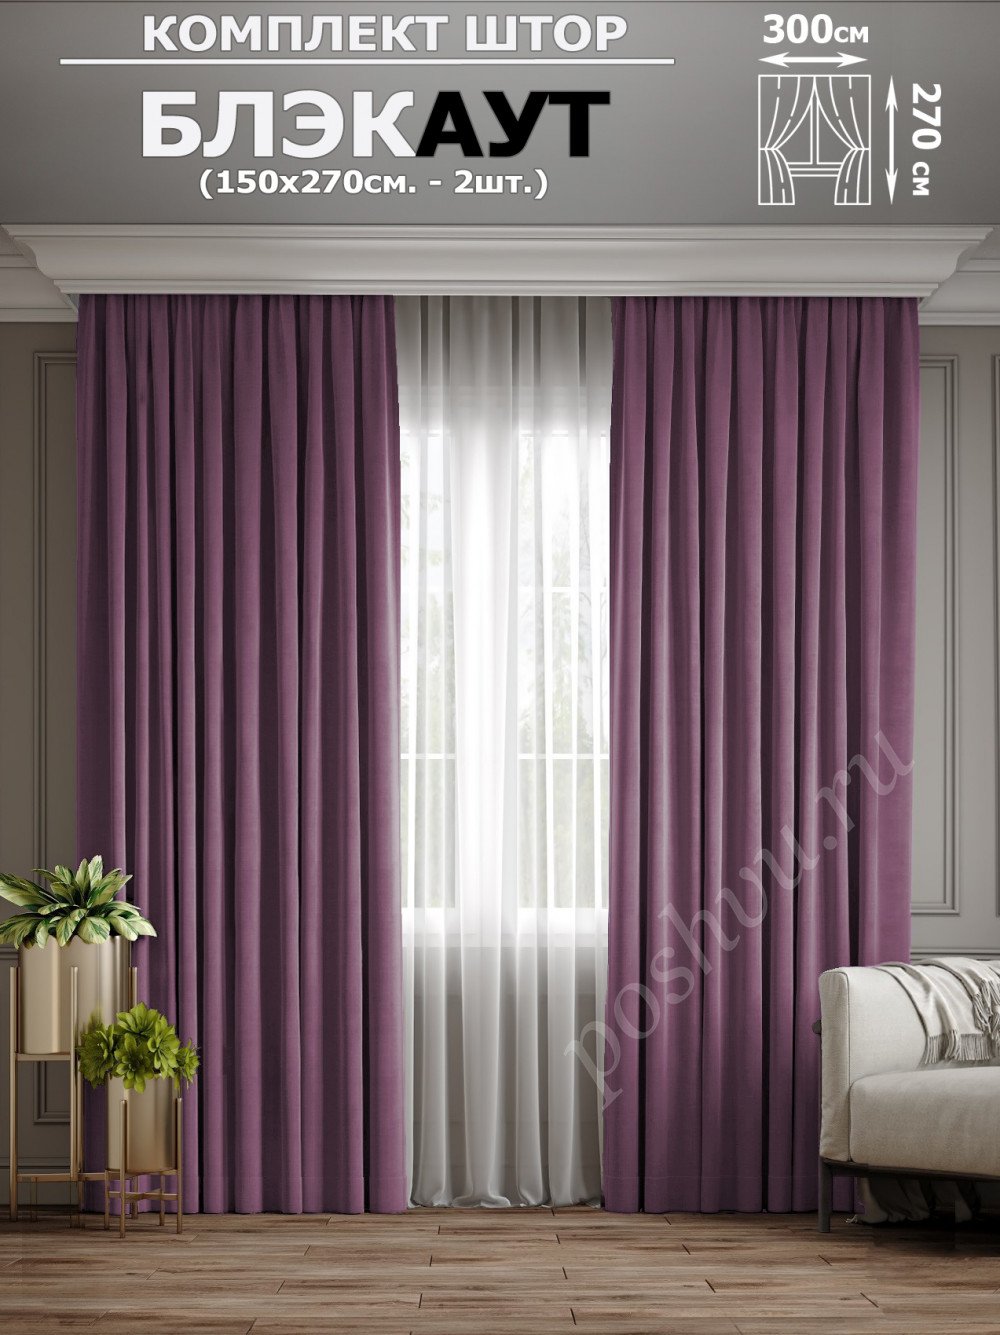 Комплект штор Блэкаут, цвет Светло-фиолетовый (150*270см.-2шт.)